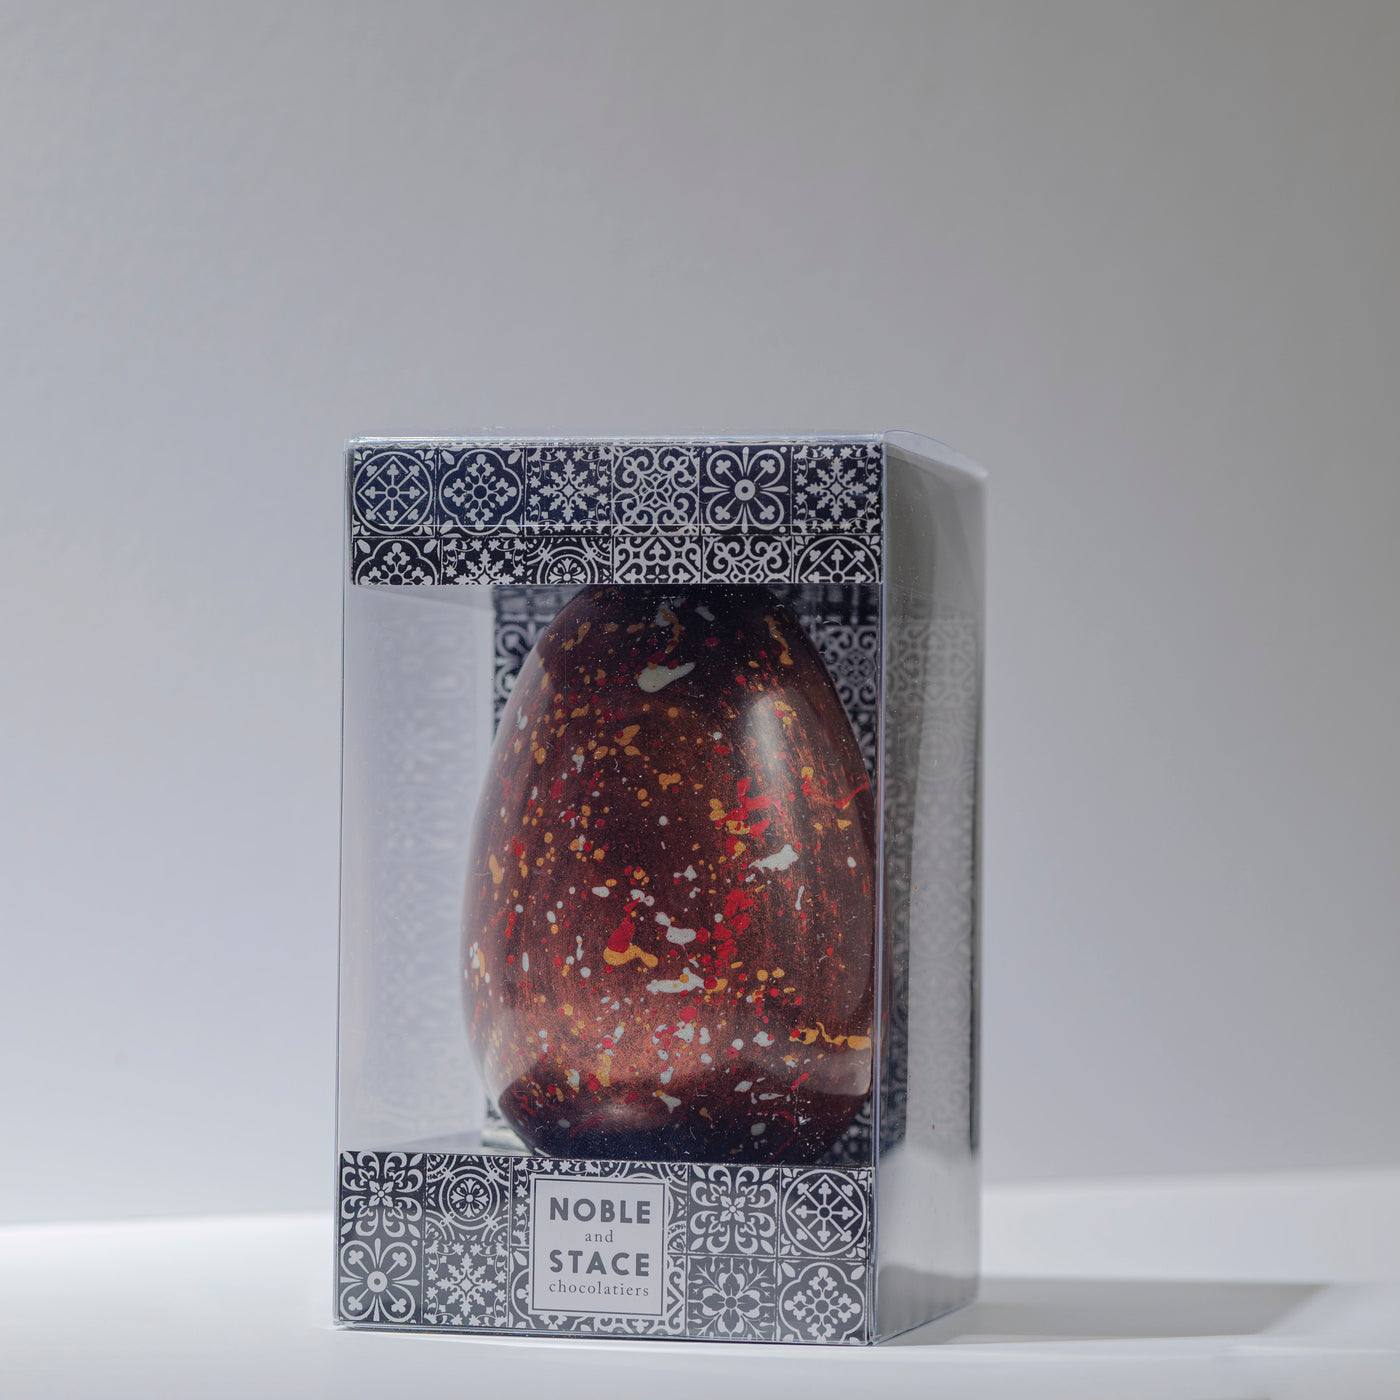 Dark Chocolate Easter Egg with Truffles inside